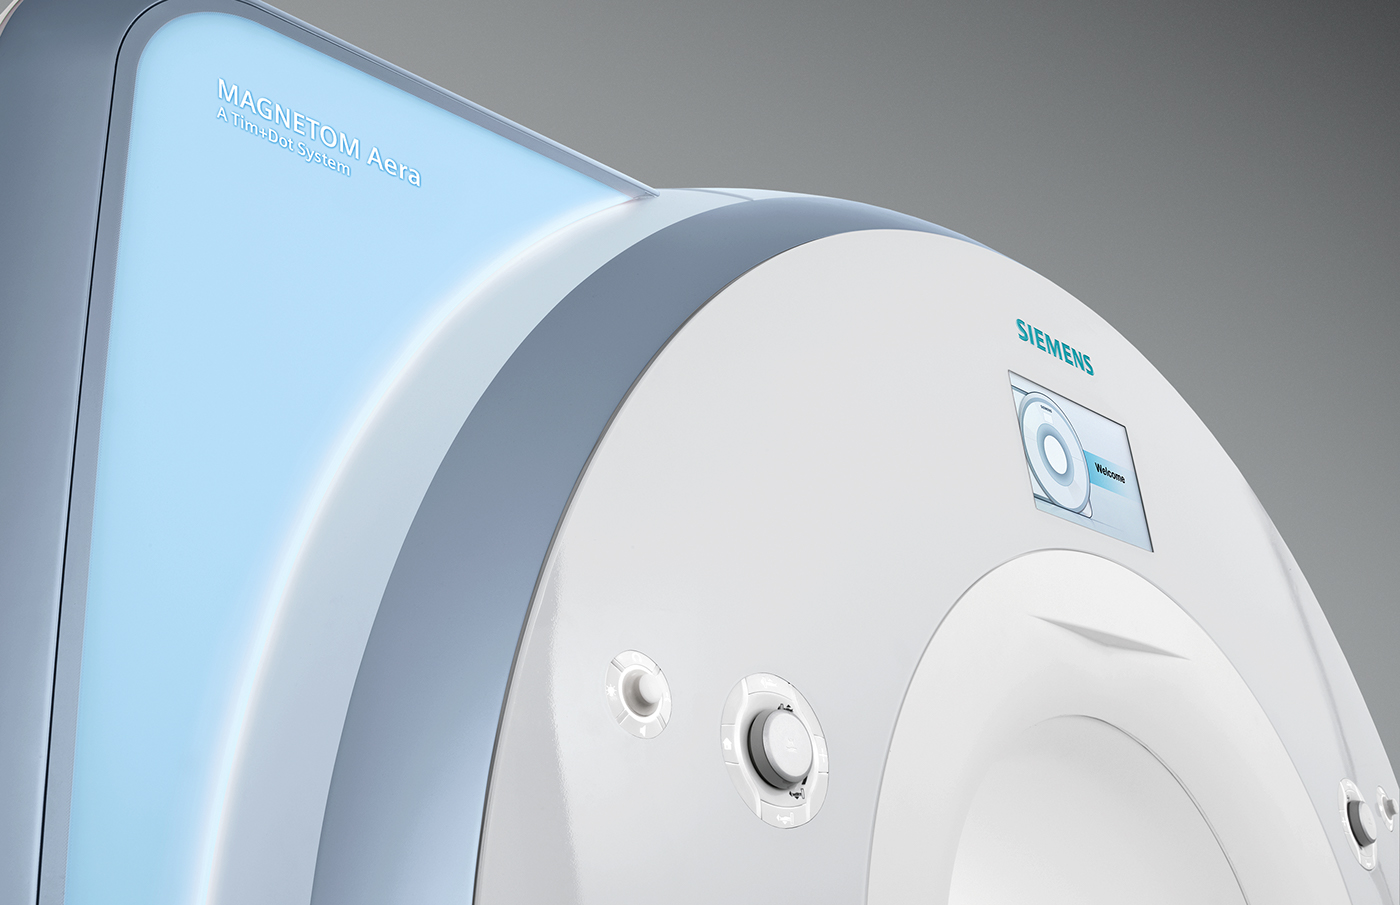 medical patient mri scanner magnet medical design care healthcare Siemens Magnetom tomography therapy